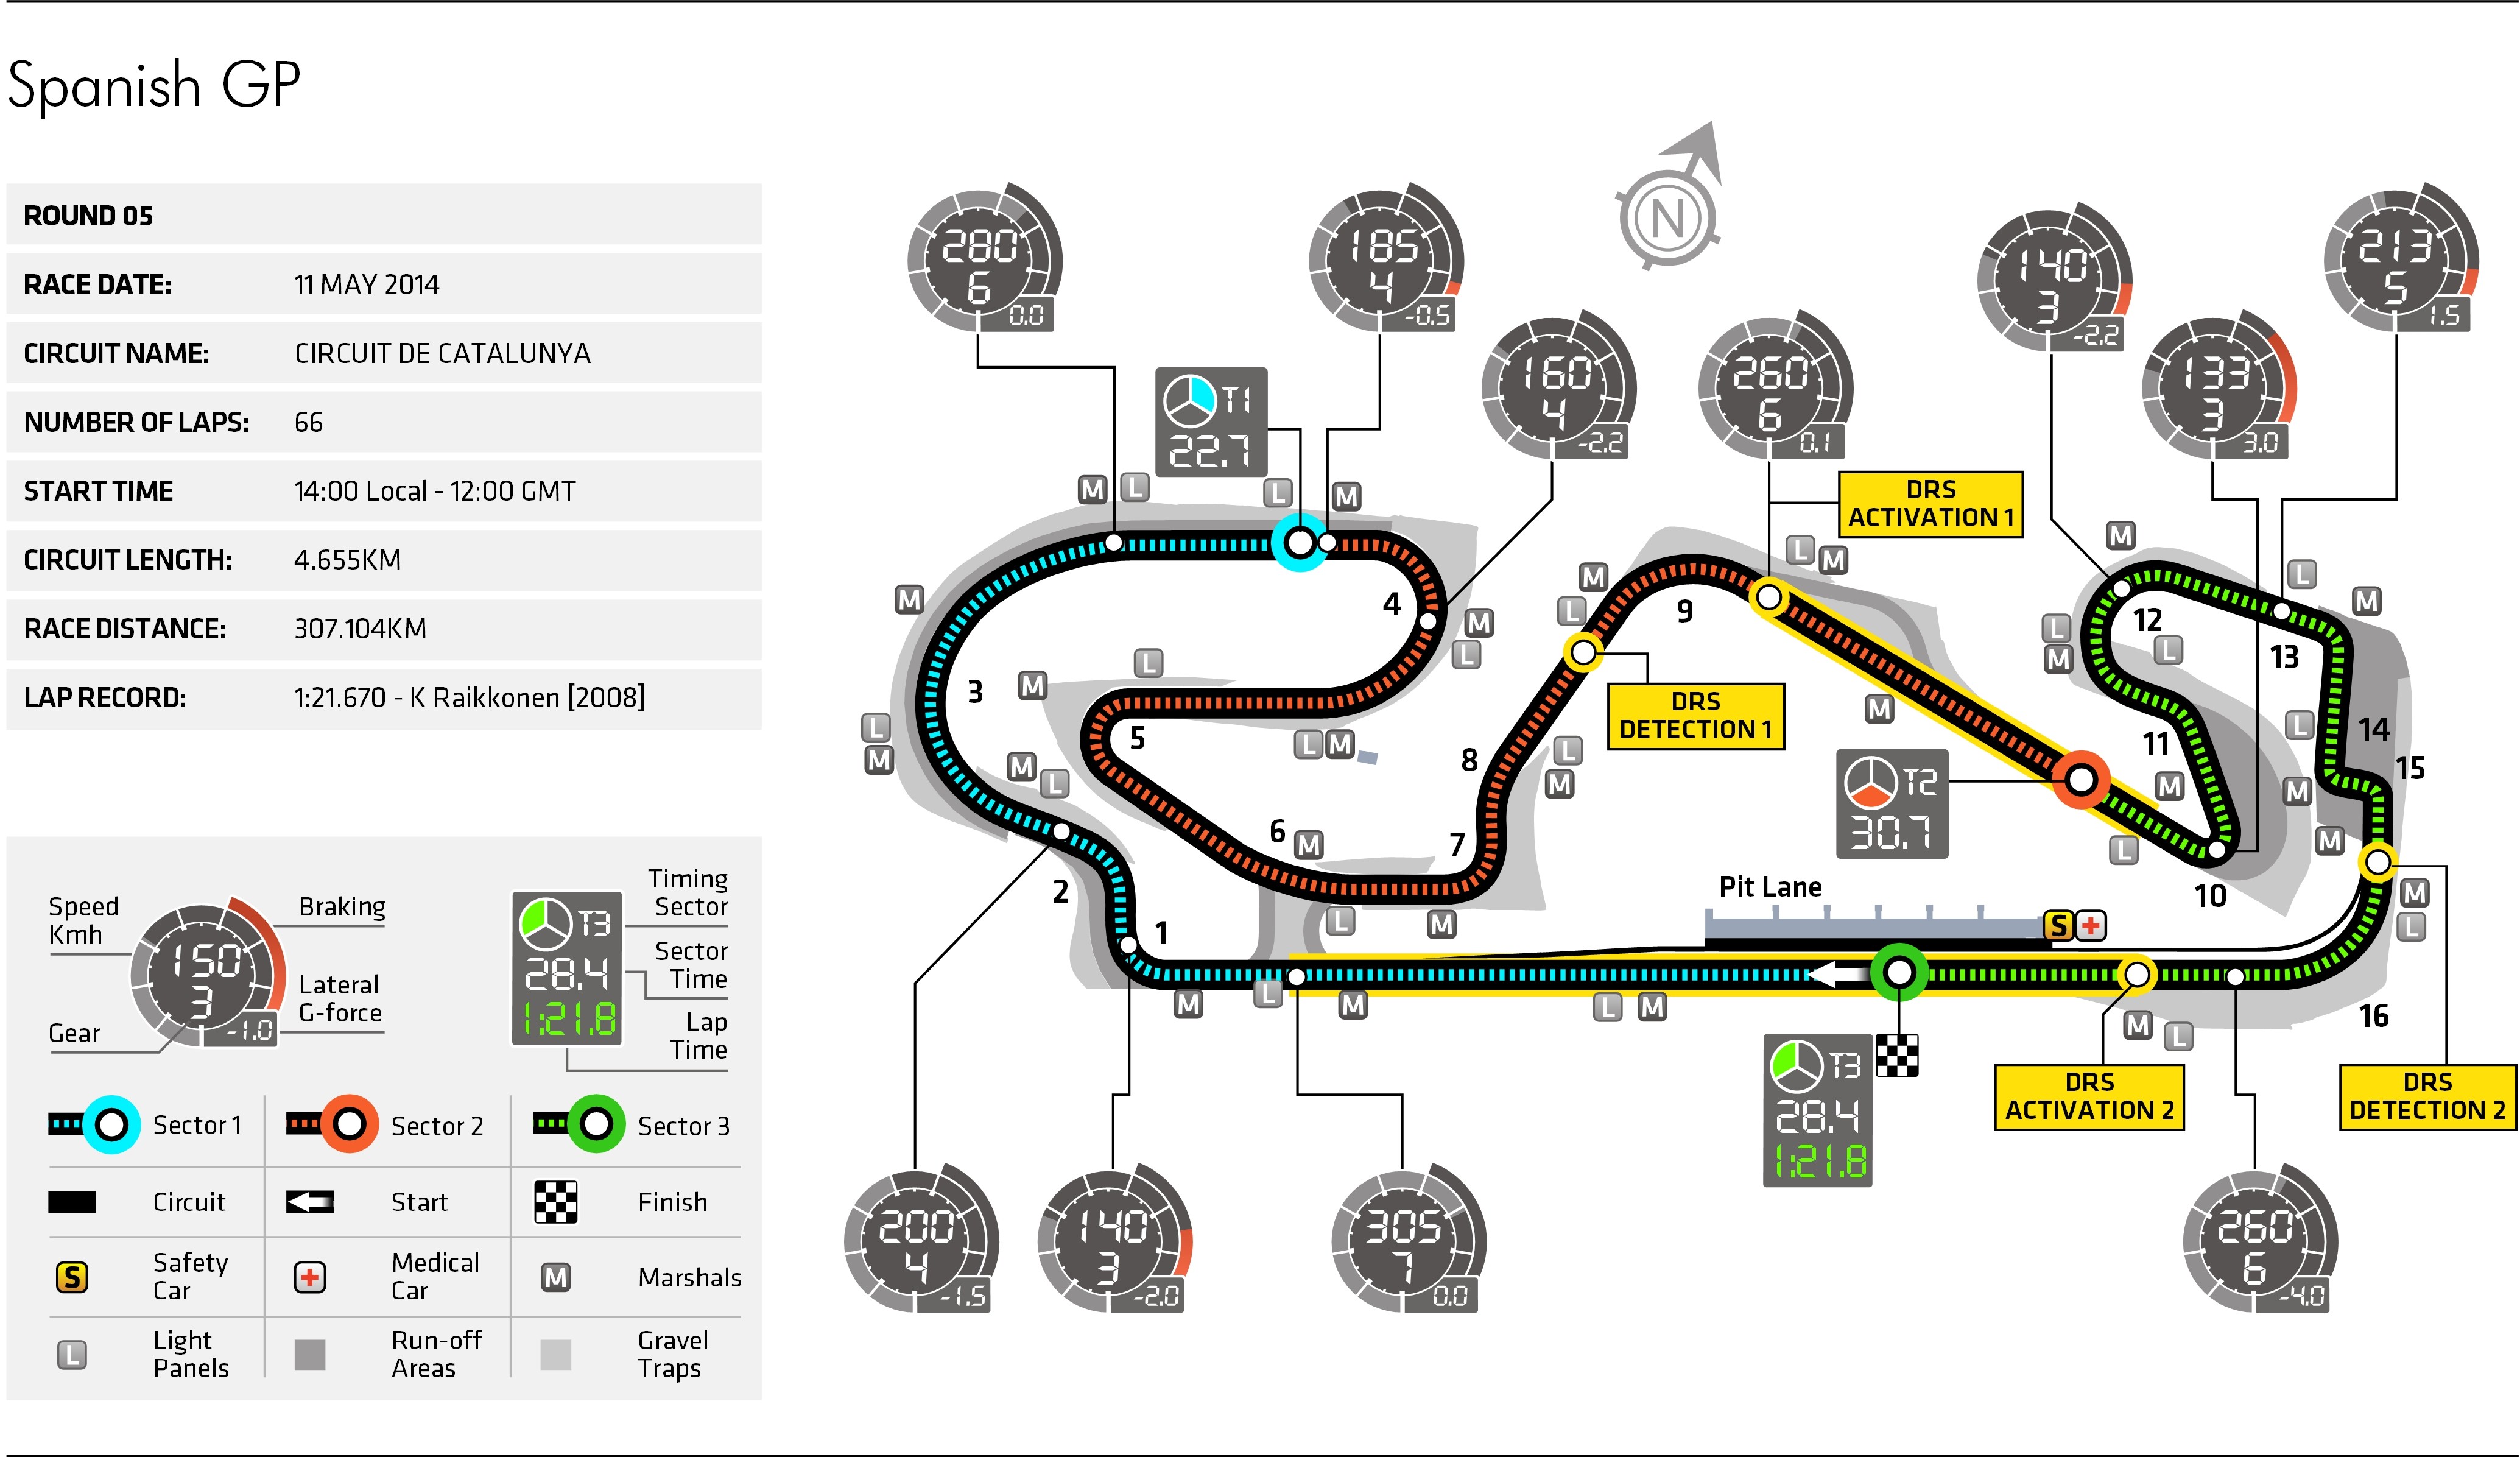 Spanish Grand Prix - Circuit Map